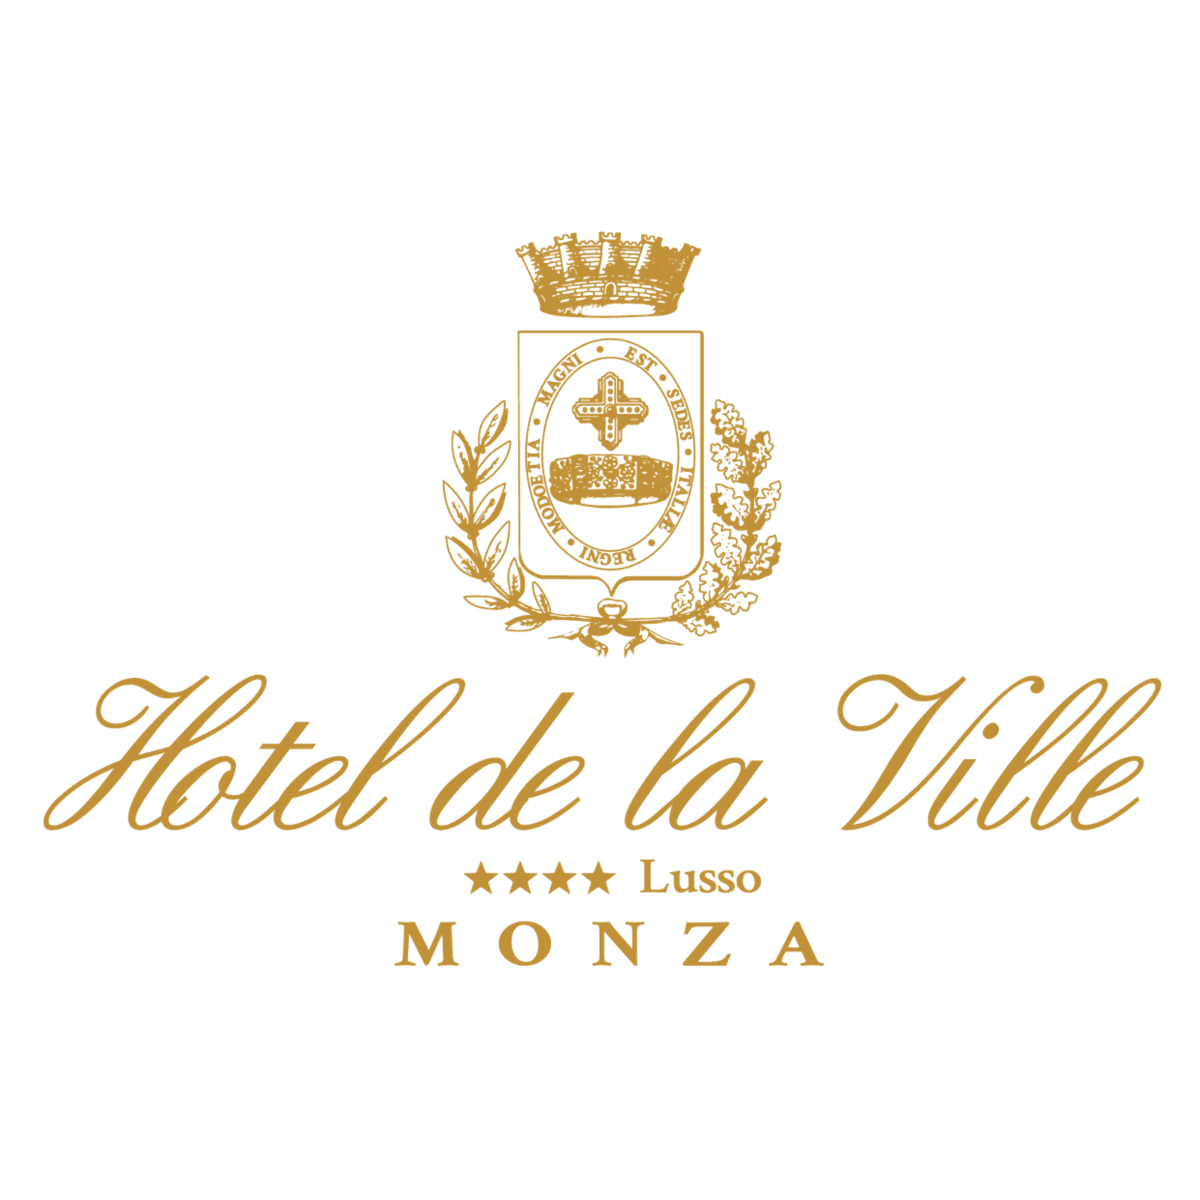 (c) Hoteldelaville.com